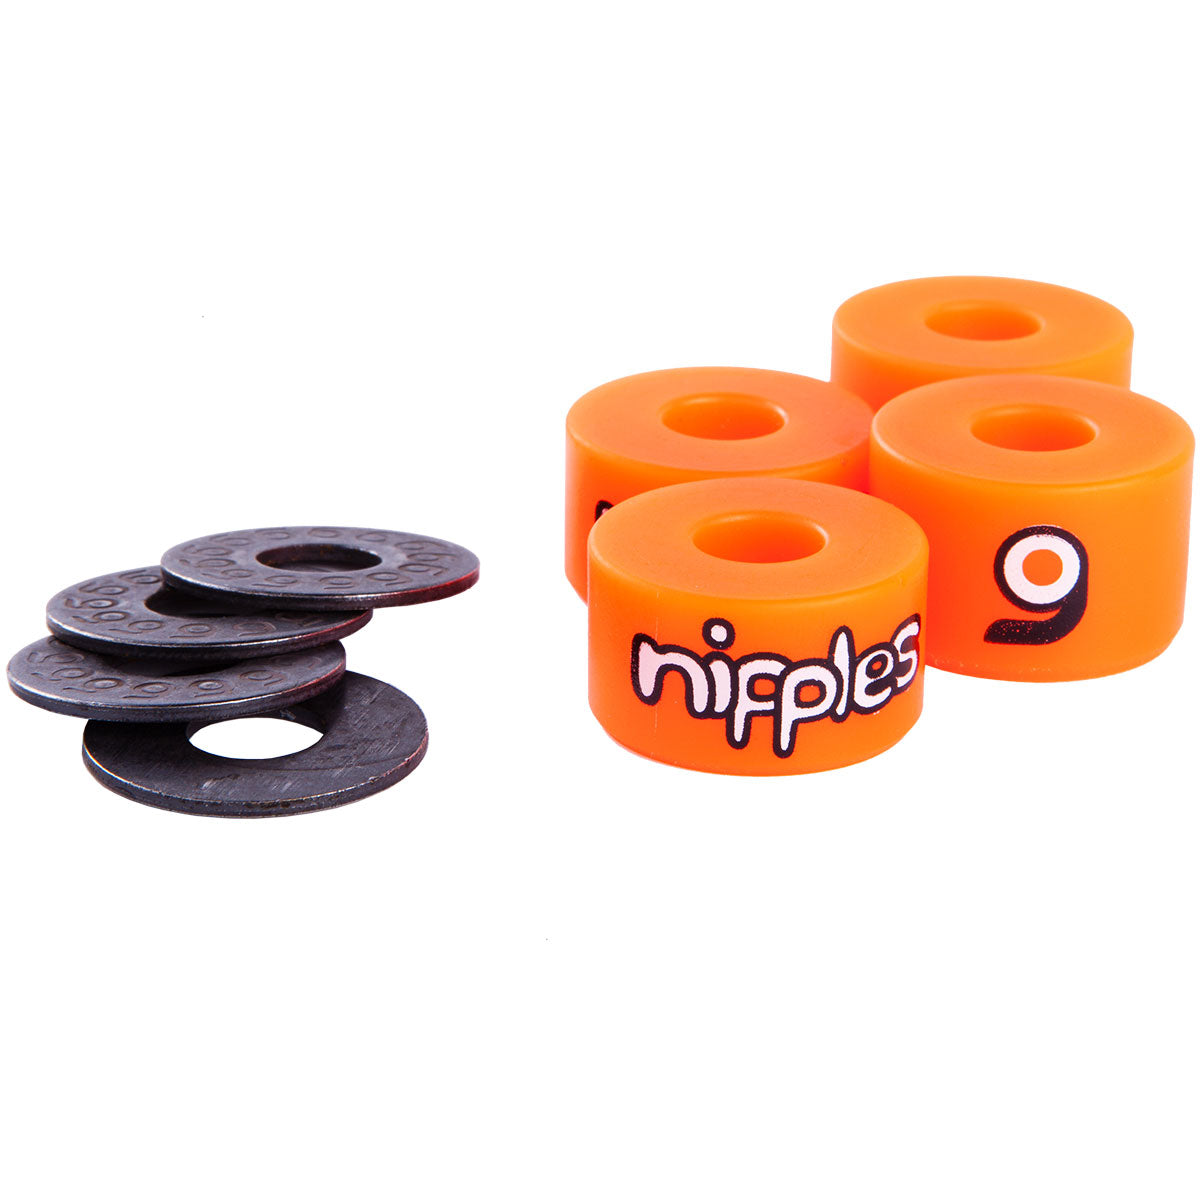 Orangatang Nipples Orange 85a/Soft image 1